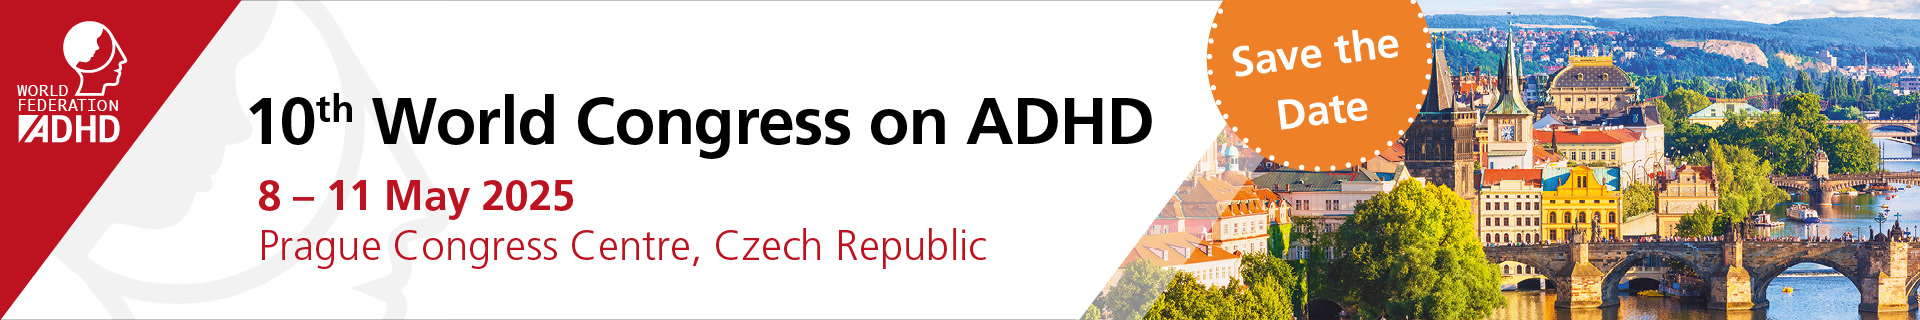 10th World Congress on ADHD in Prague